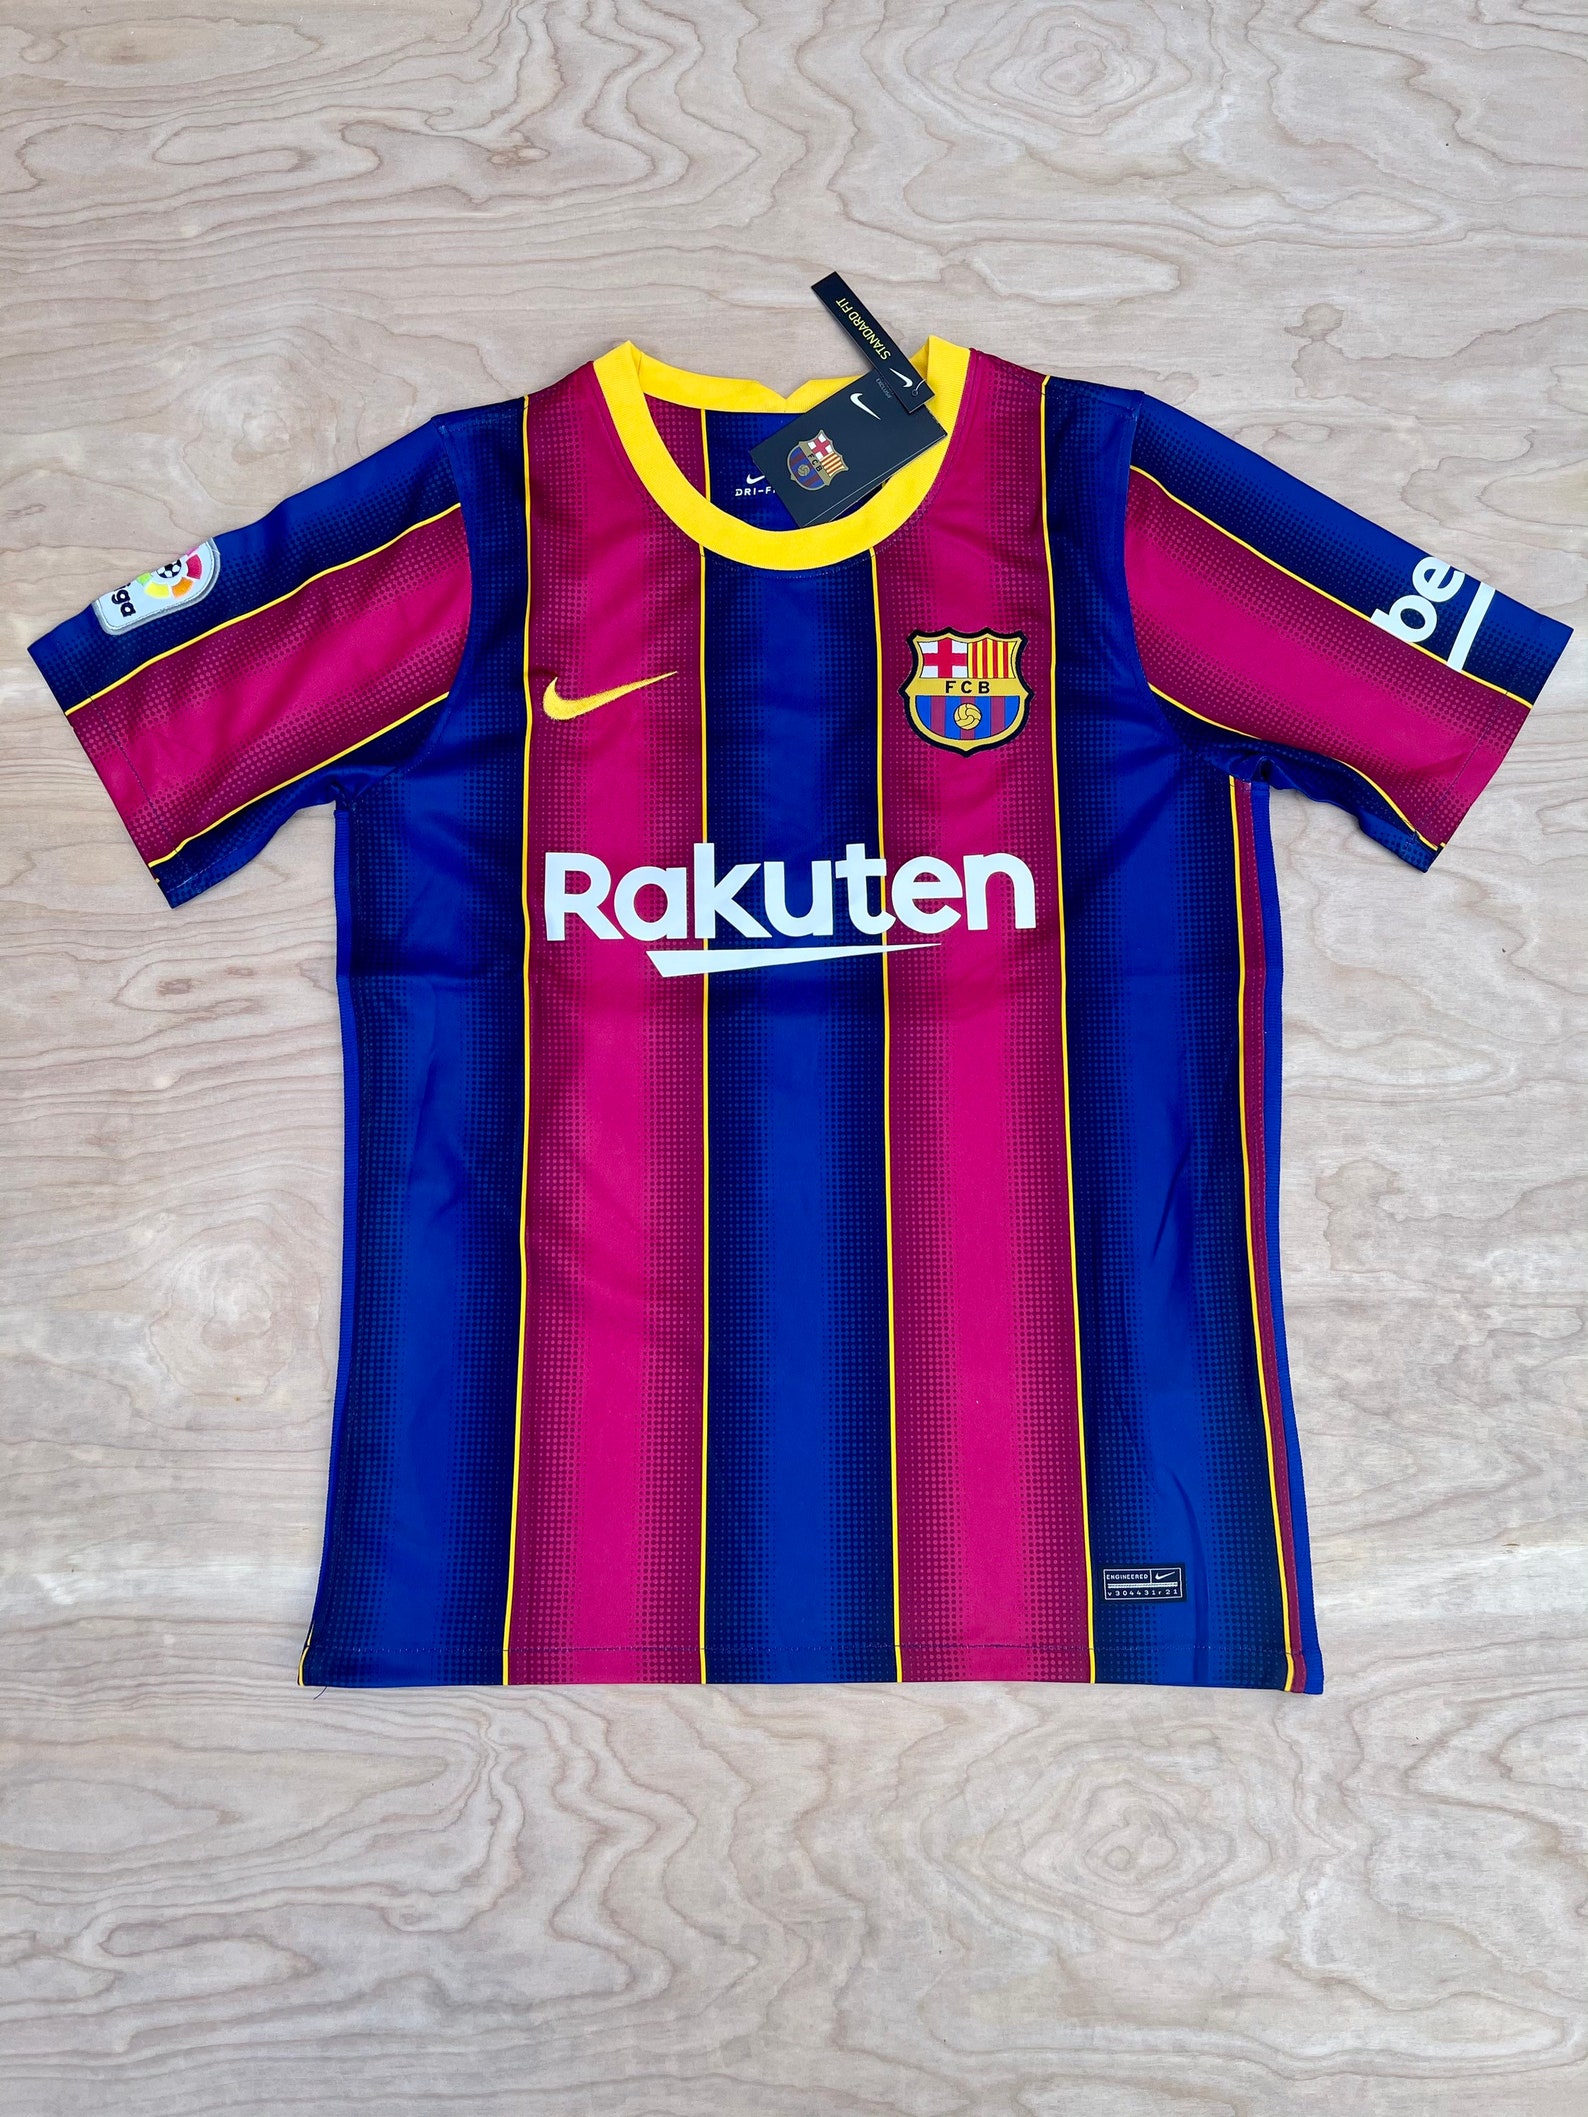 Pedri 16 Barcelona home soccer jersey 20/21 | Etsy